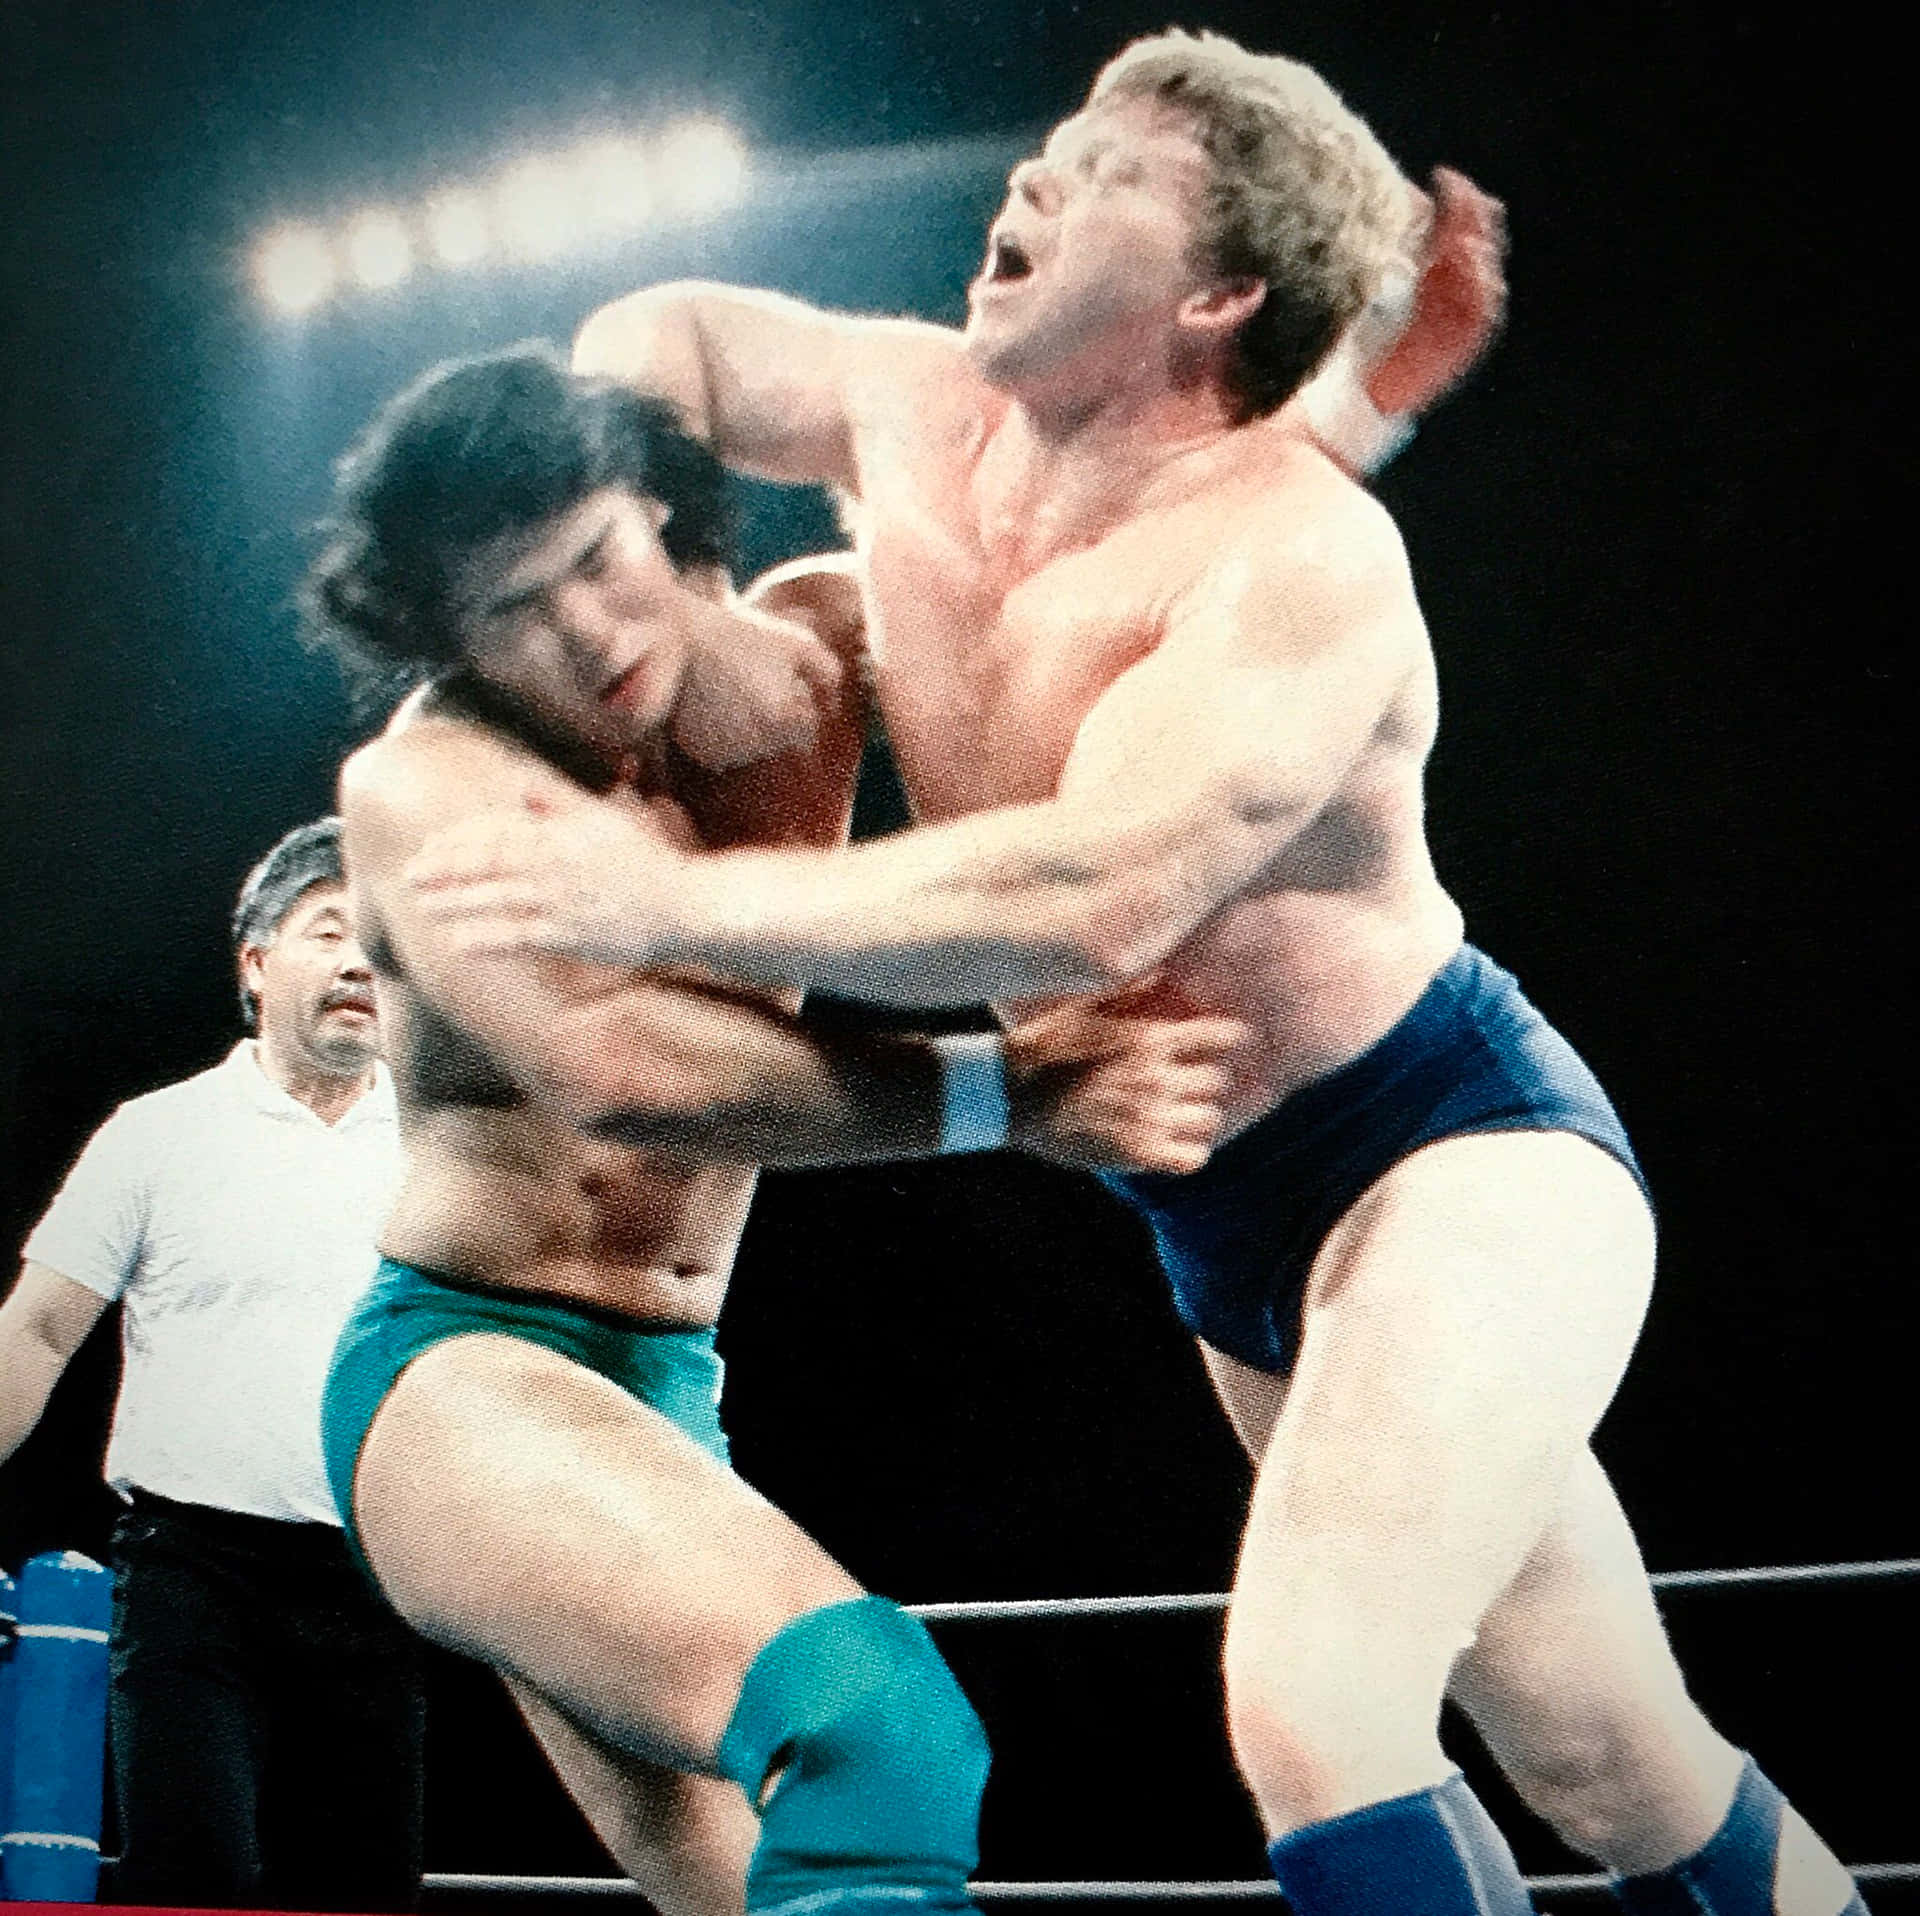 Masakatsu Funaki and Bob Backlund at the UWF 1989 event. Wallpaper